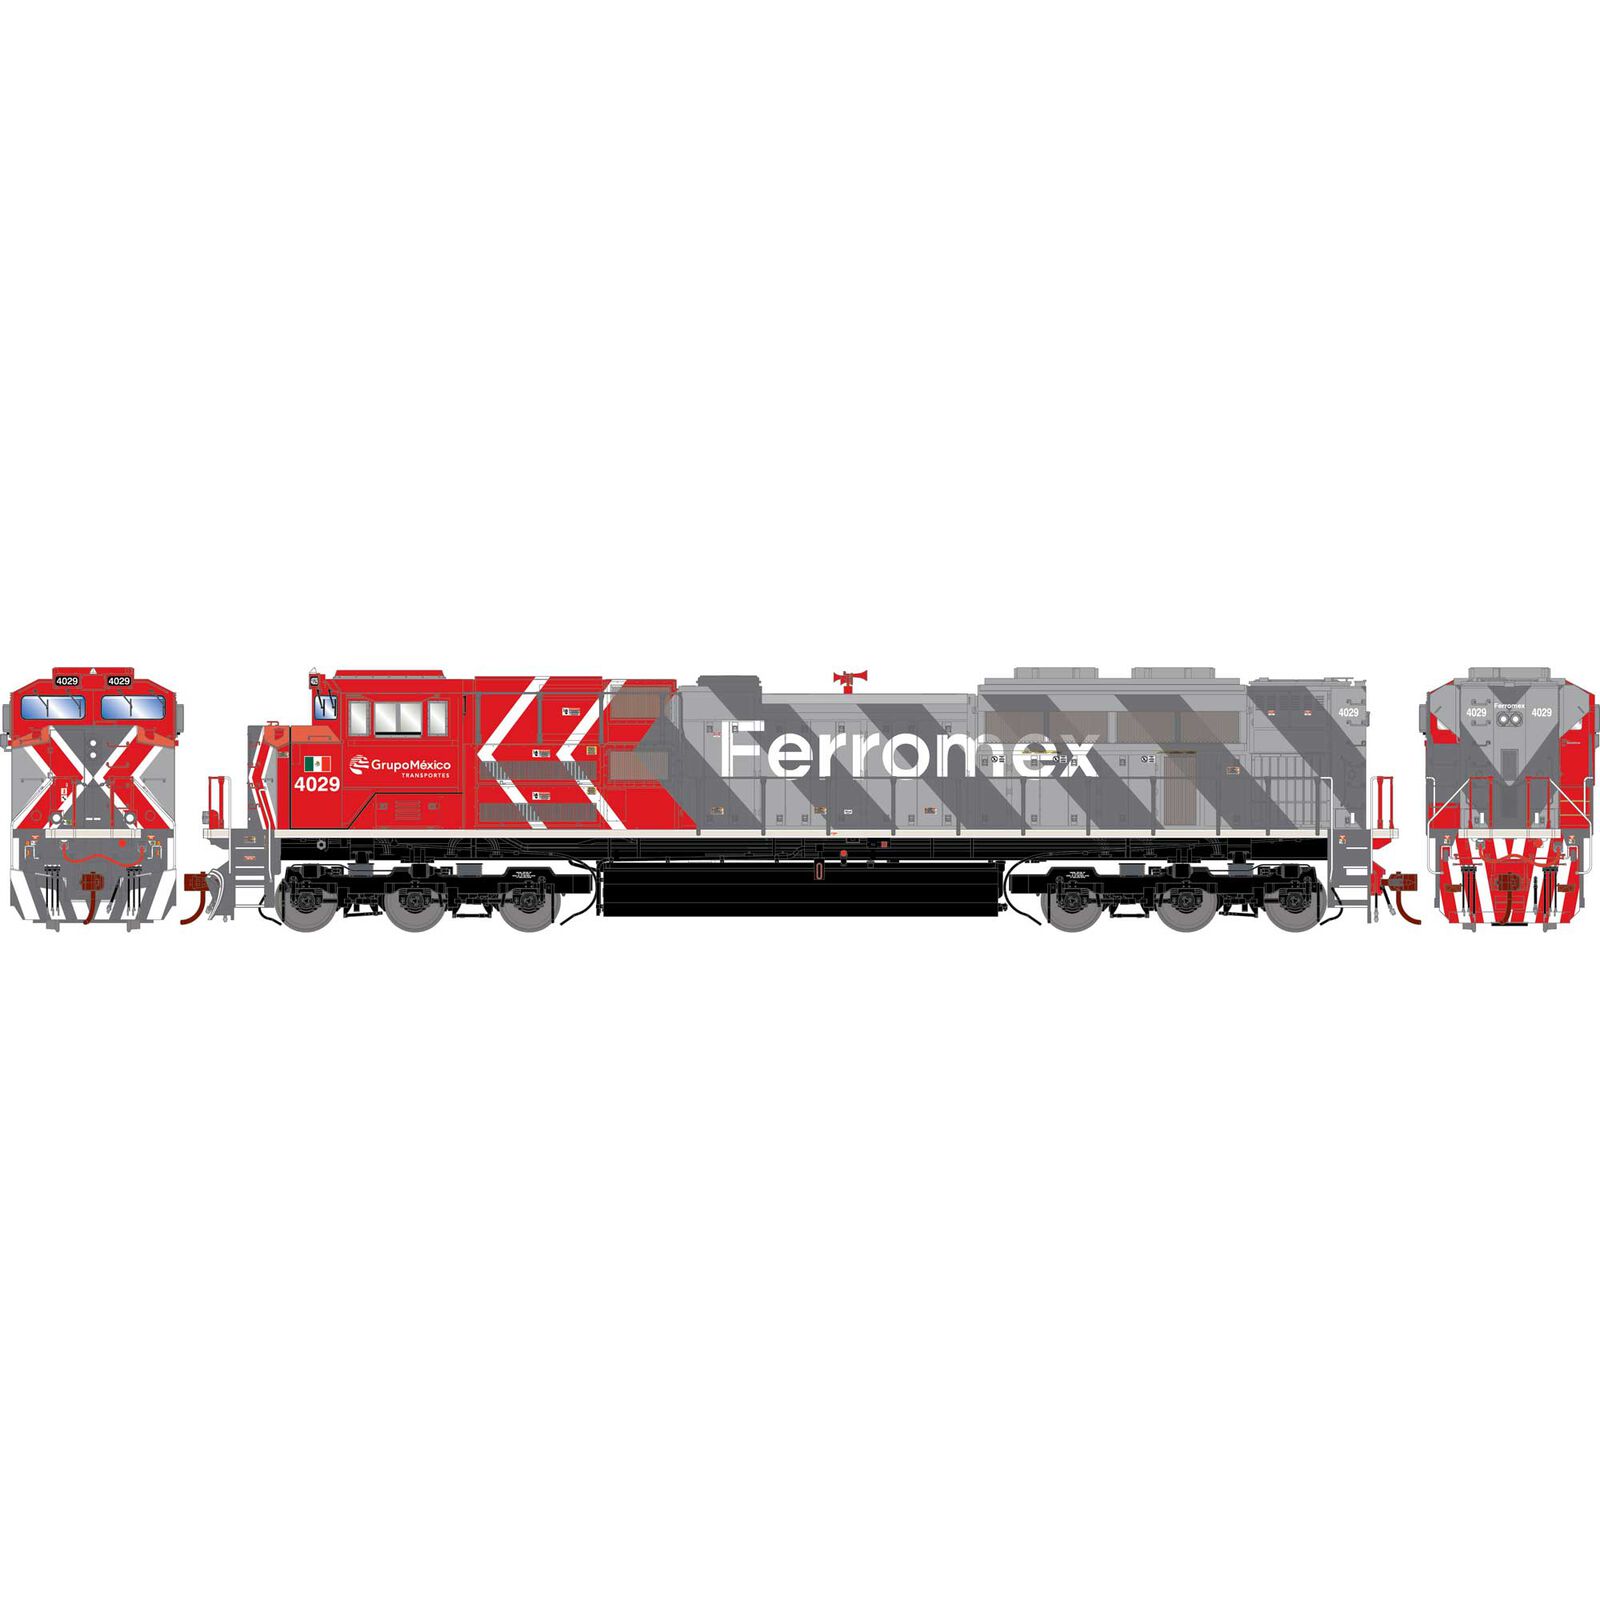 HO SD70ACe Locomotive with DCC & Sound, Ferromex #4029